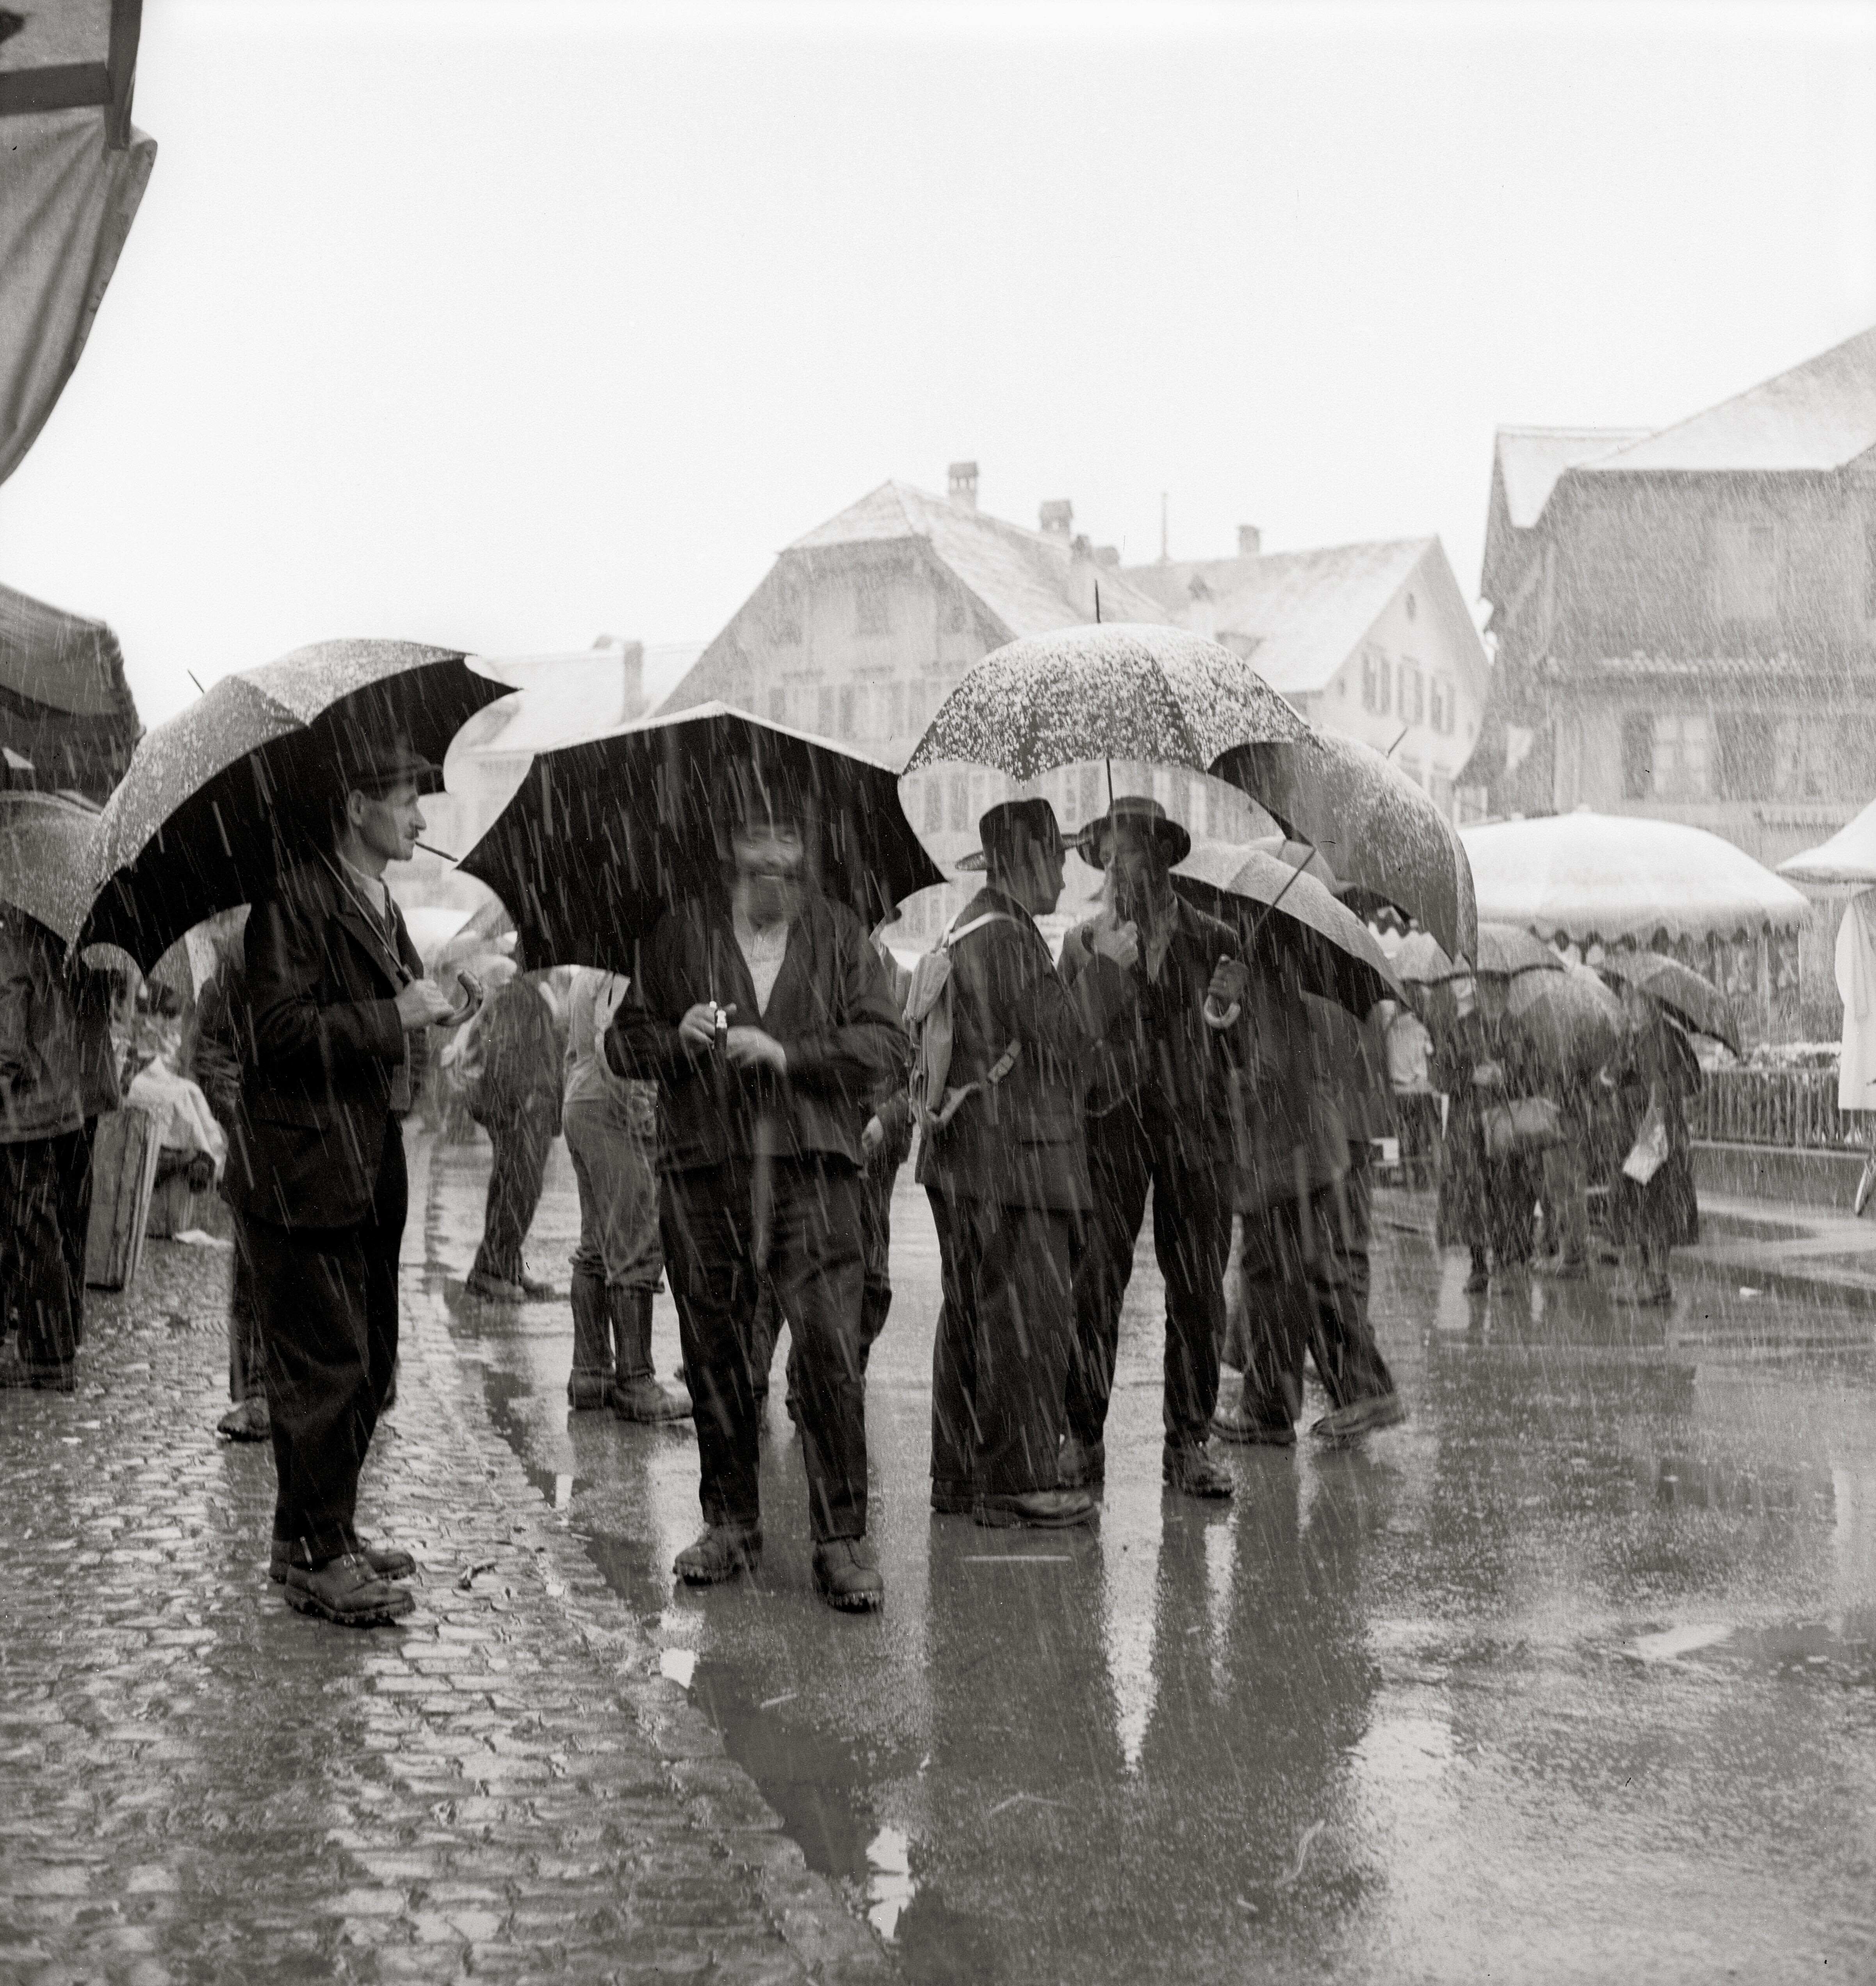 Осенний дождь на площади, Штанс, 1942. Фотограф Леонард фон Матт